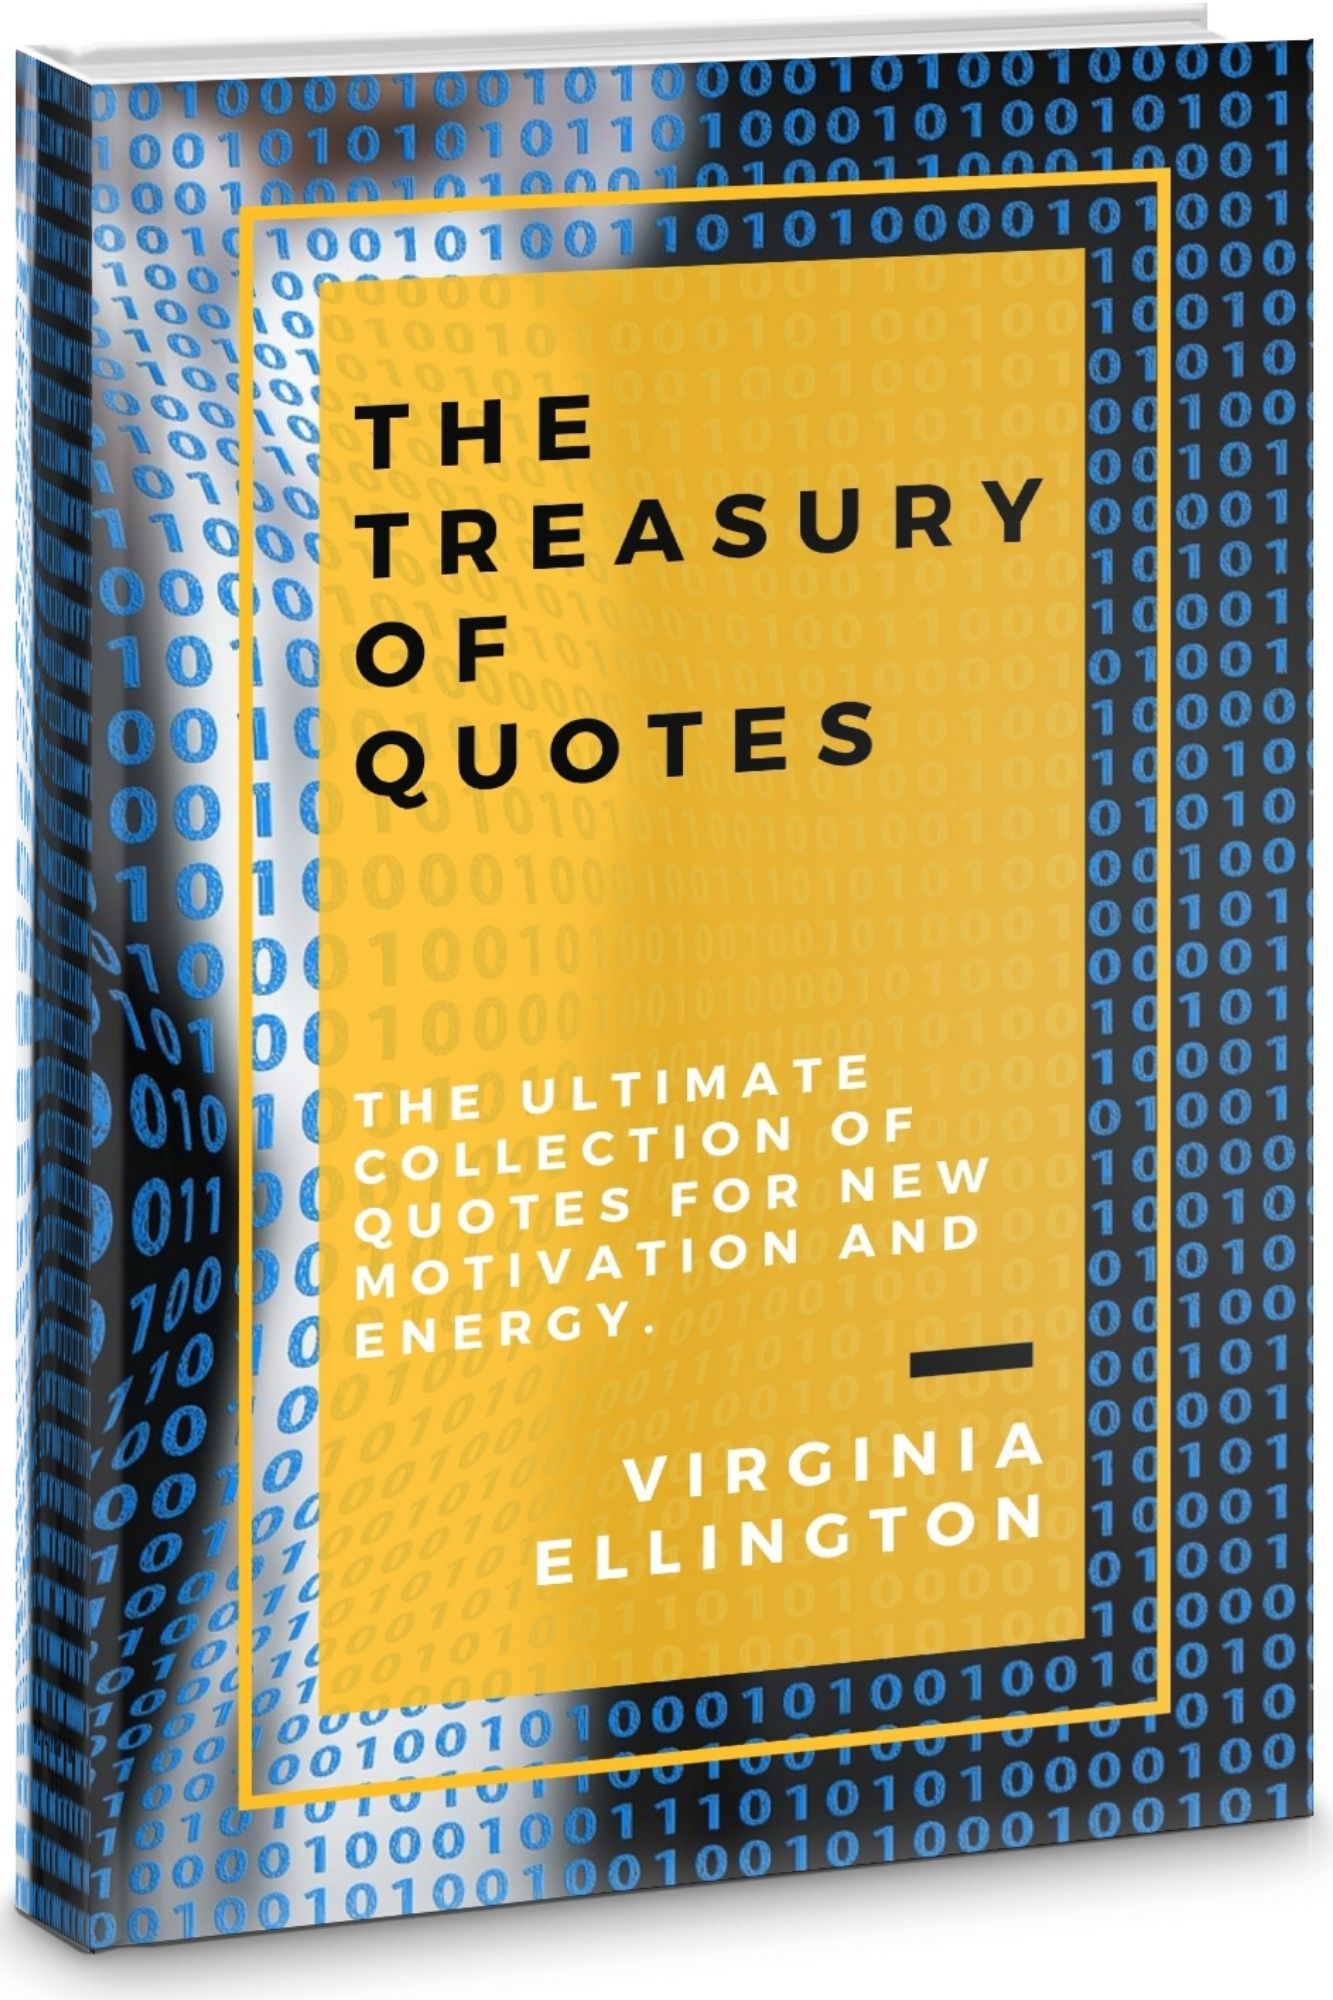 FREE: The Treasury of Quotes by Virginia Ellington